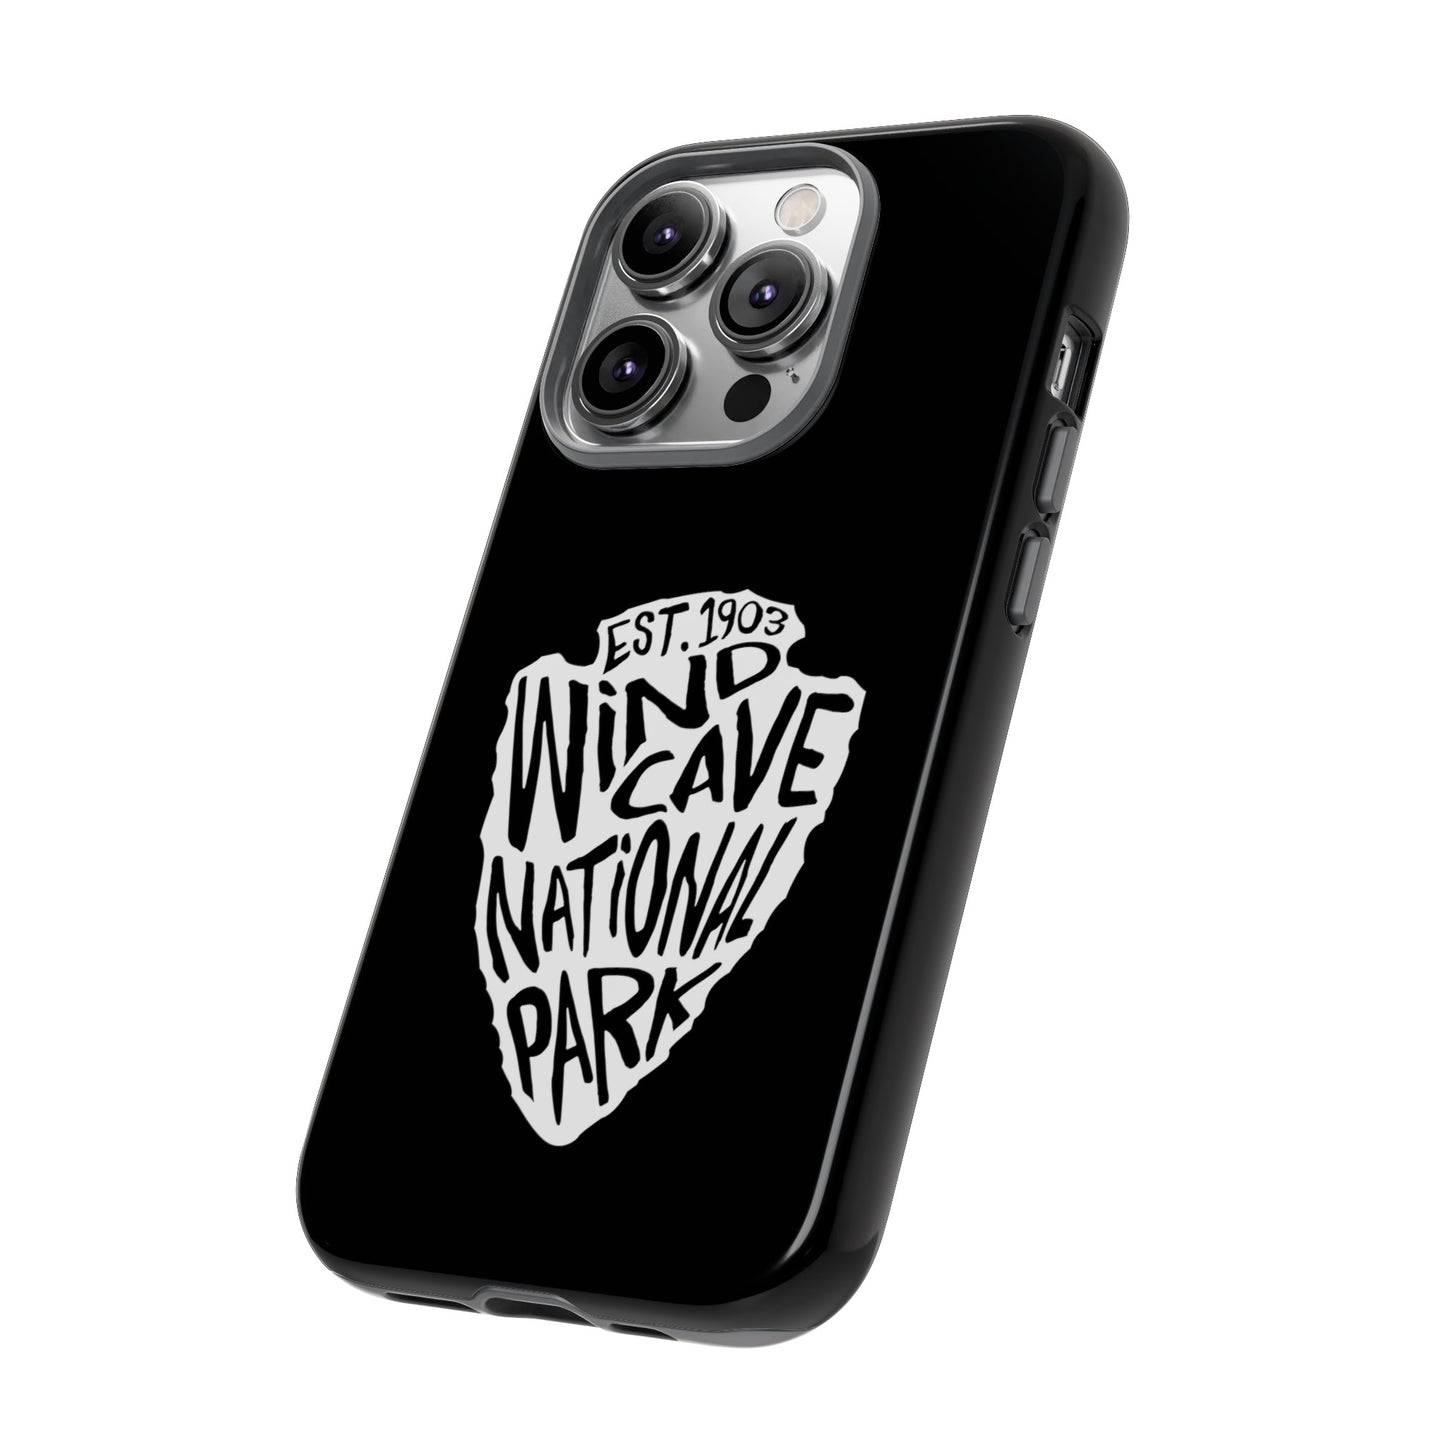 Wind Cave National Park Phone Case - Arrowhead Design